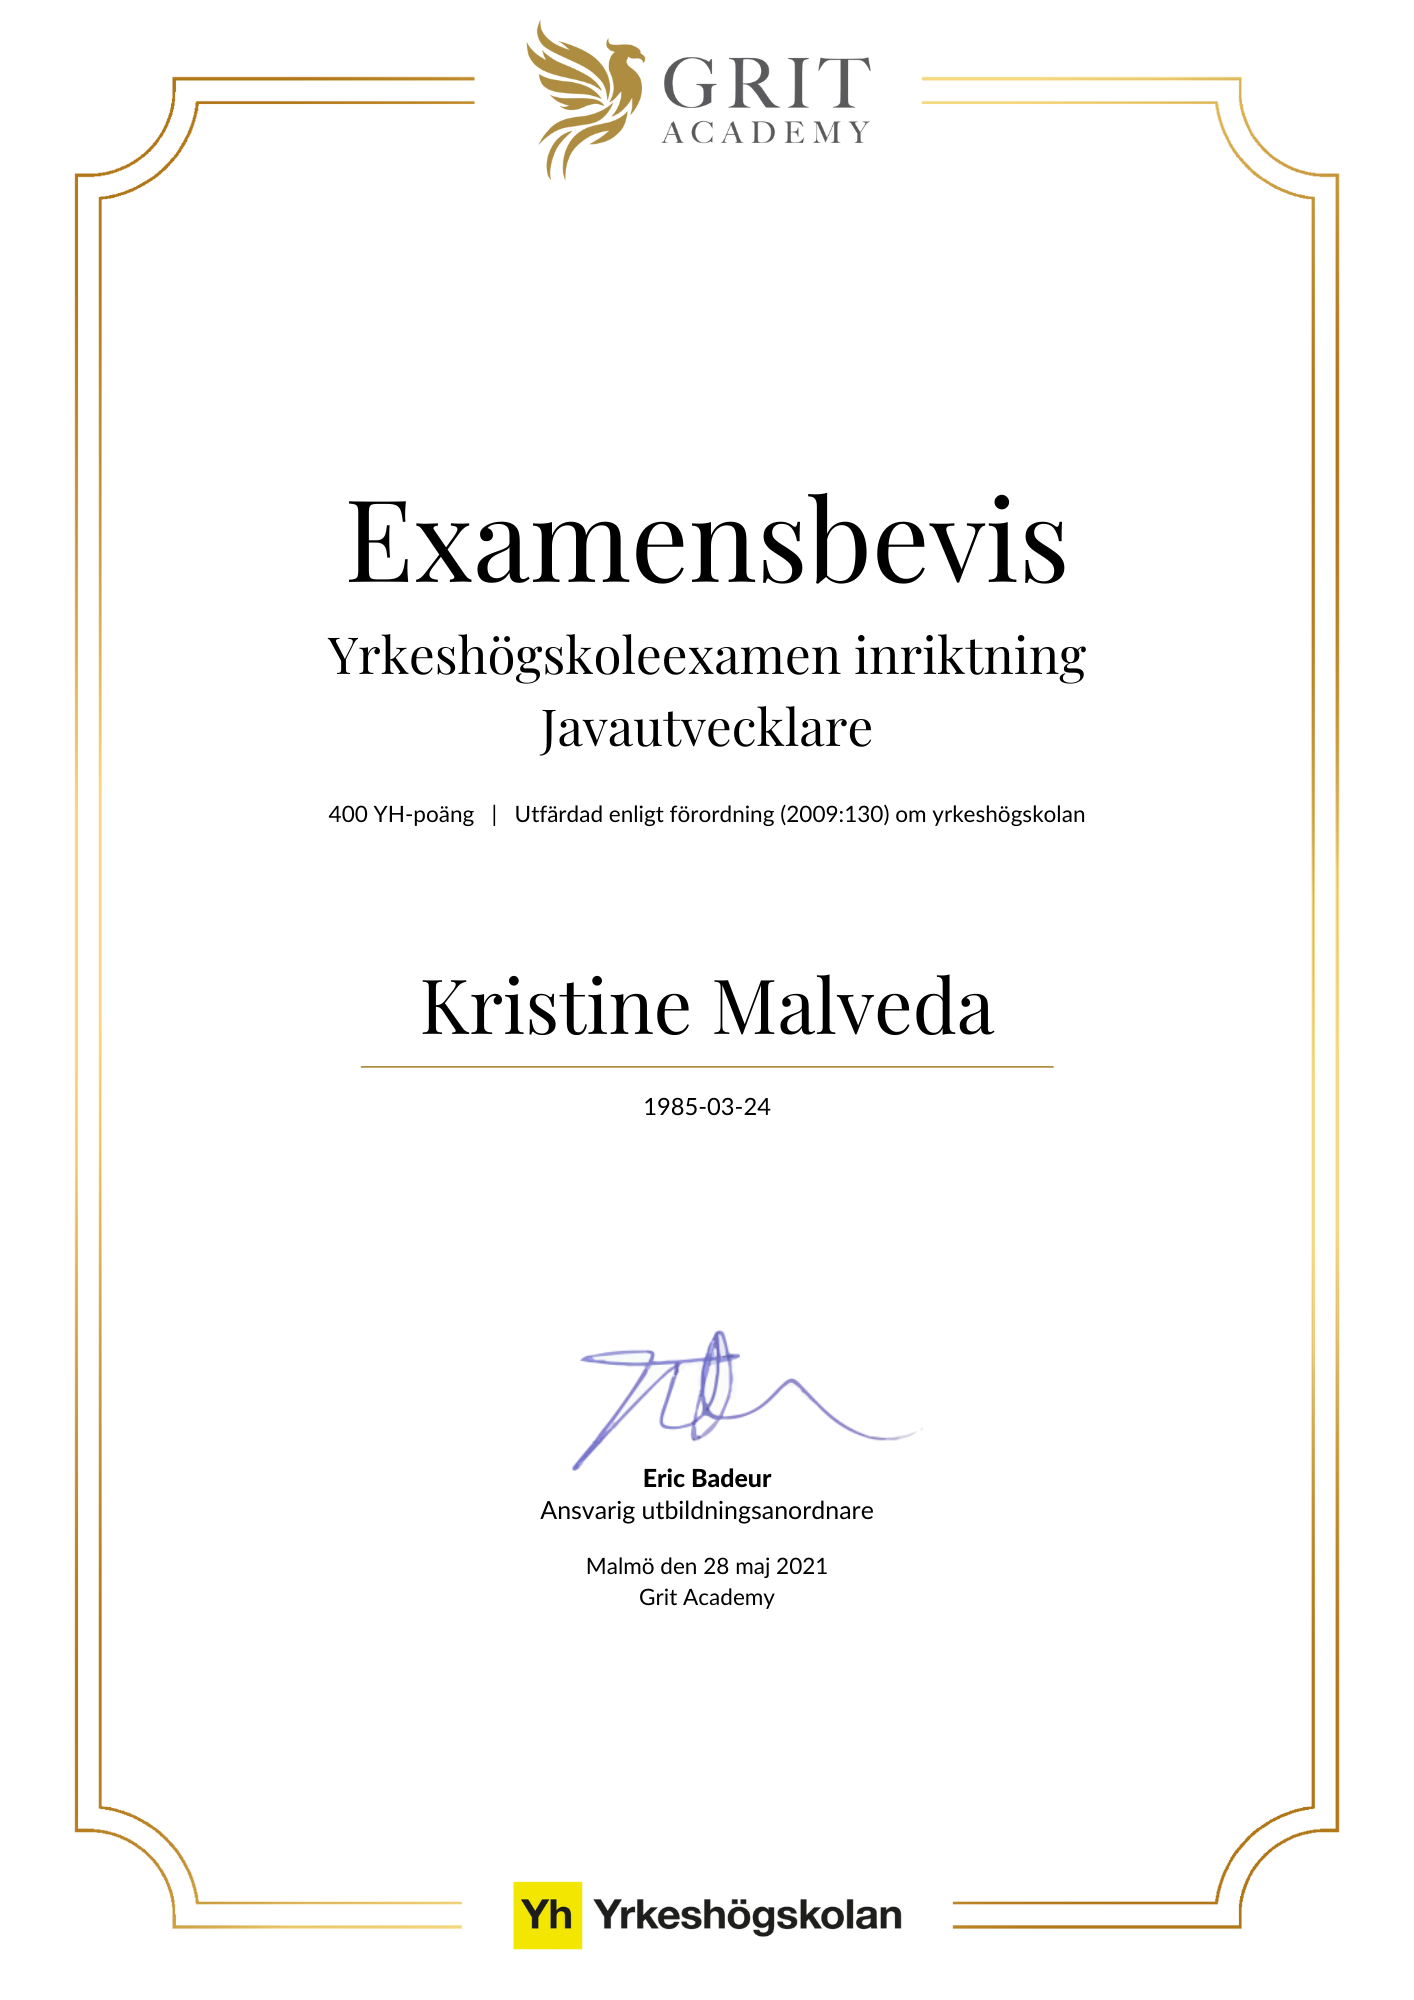 Examensbevis Kristine Malveda - 1